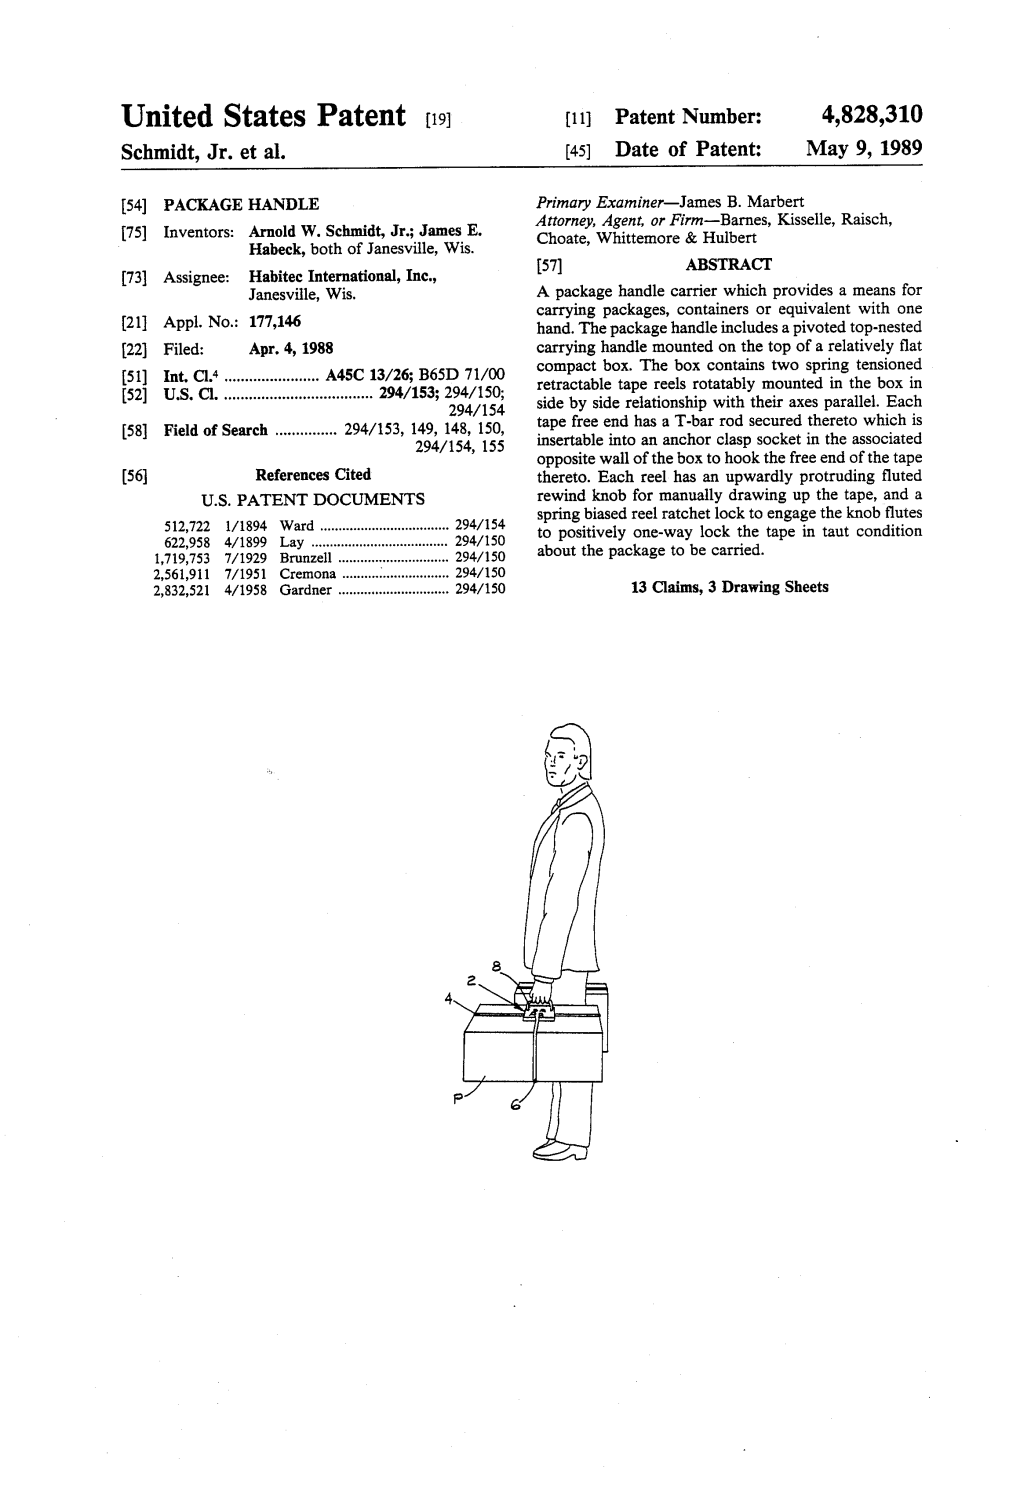 United States Patent (19) 11 Patent Number: 4,828,310 Schmidt, Jr